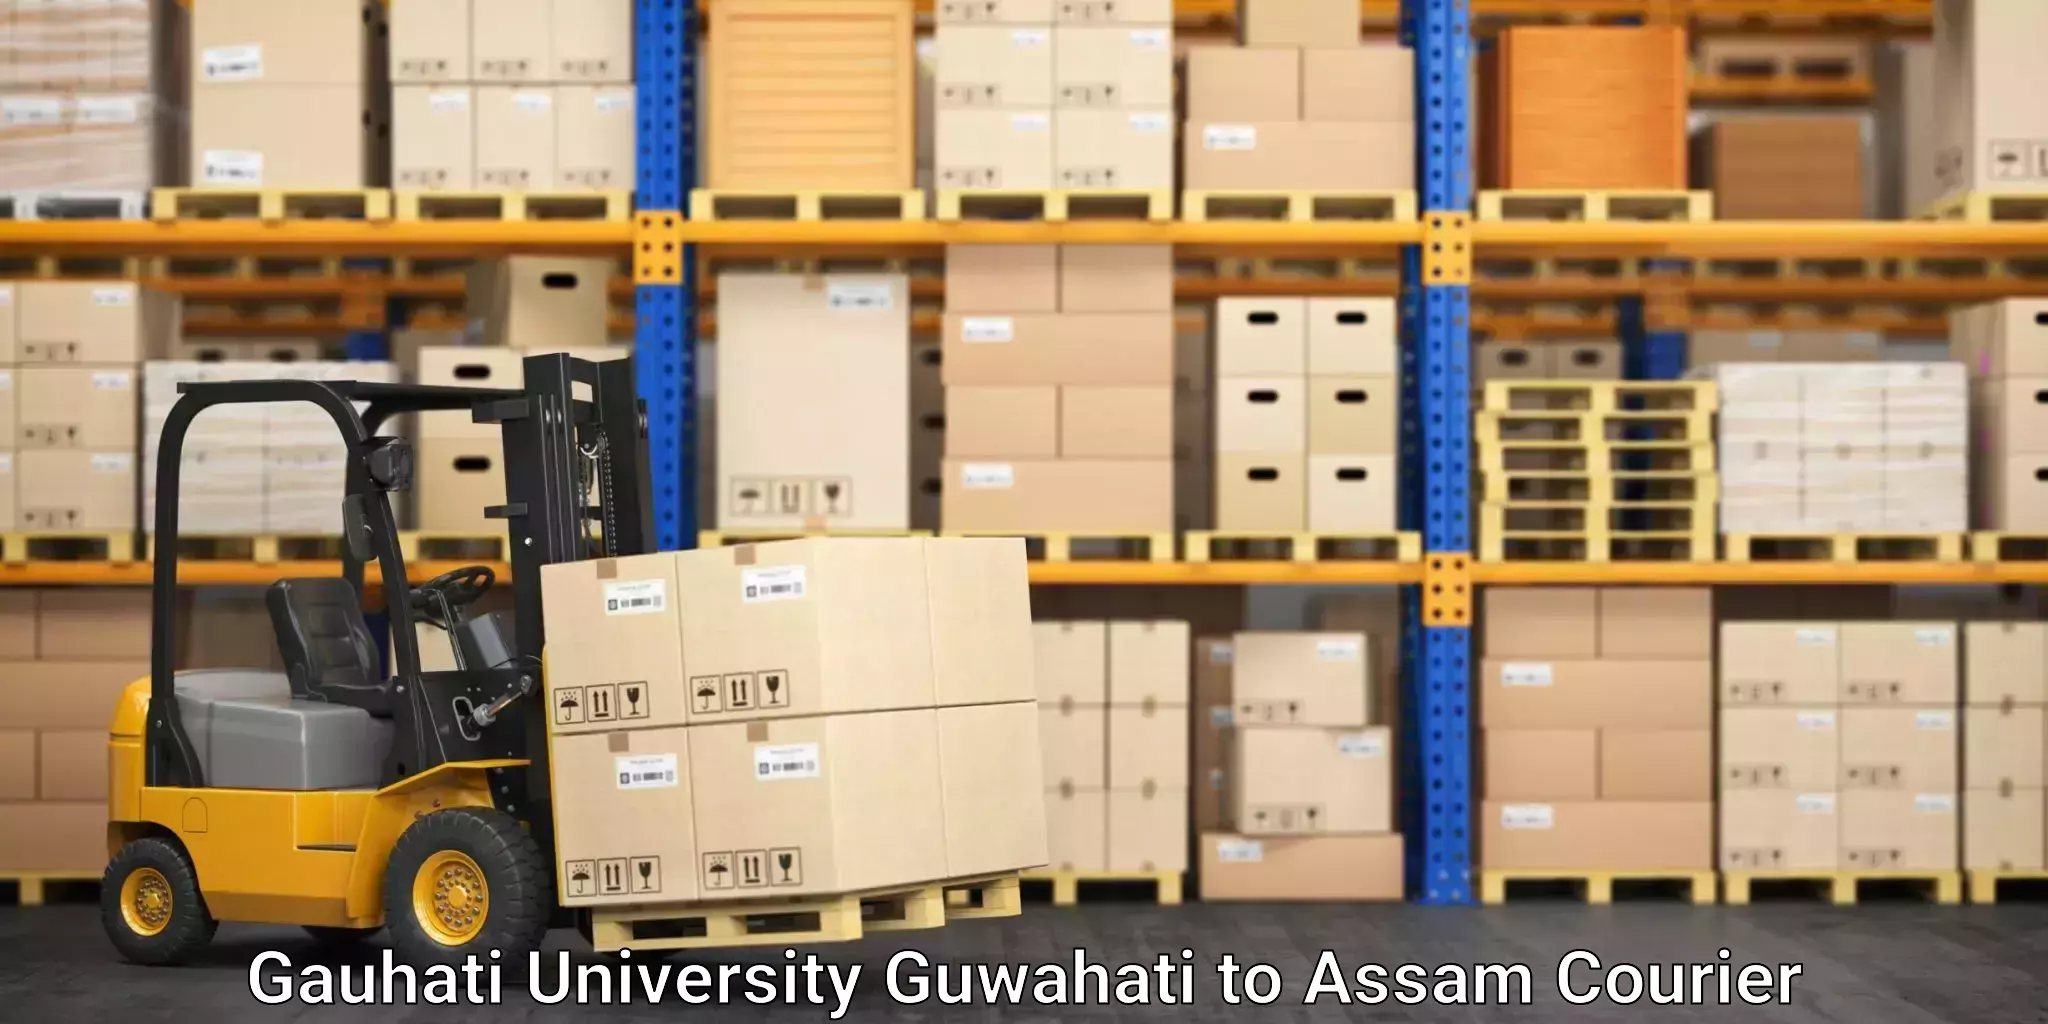 Logistics service provider in Gauhati University Guwahati to Assam